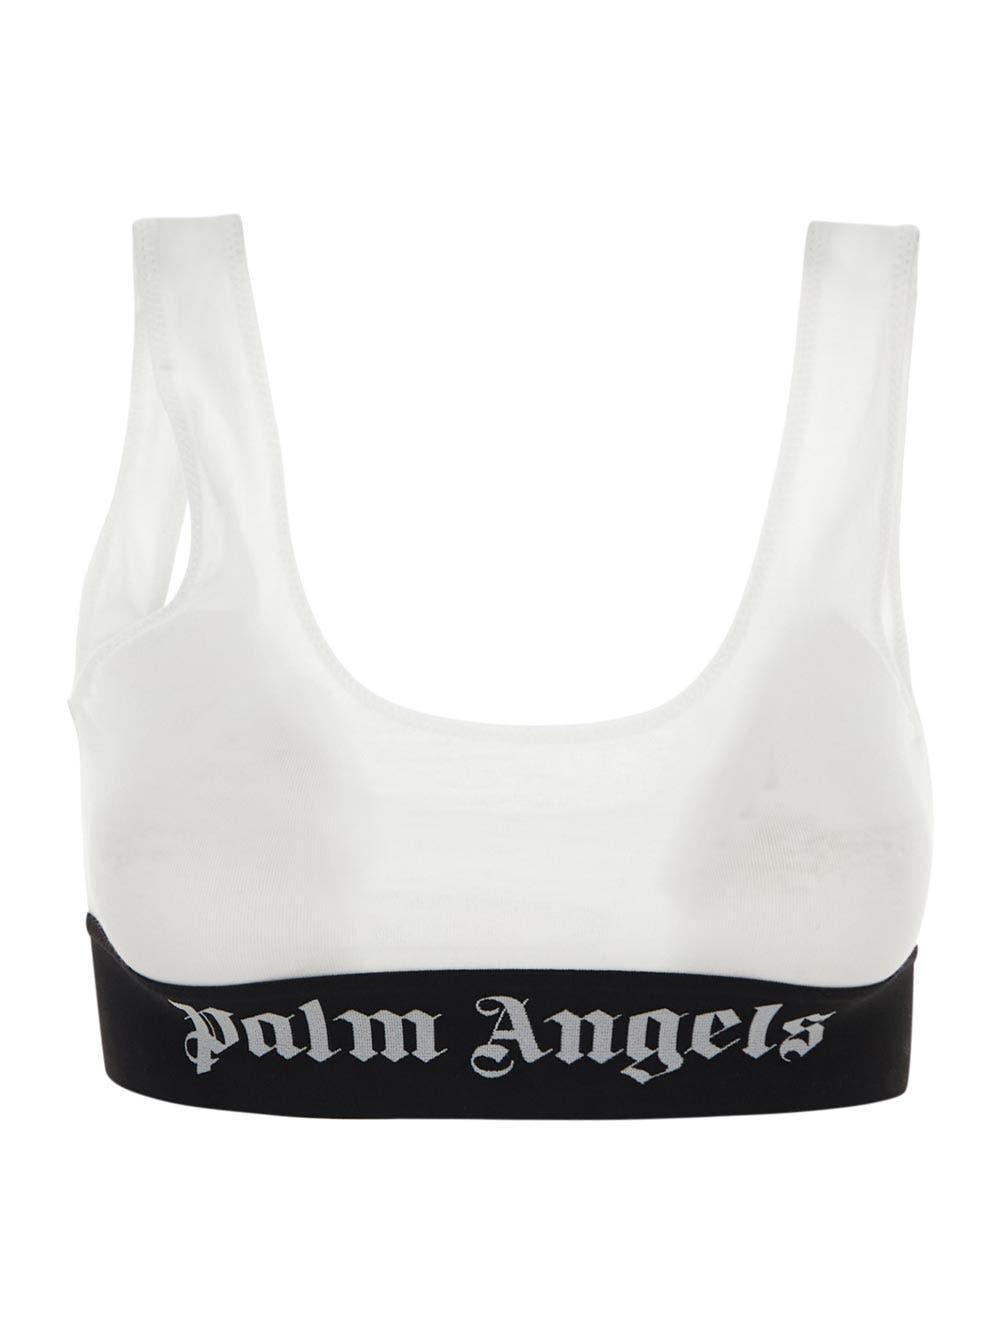 Palm Angels Classic Logo Bra